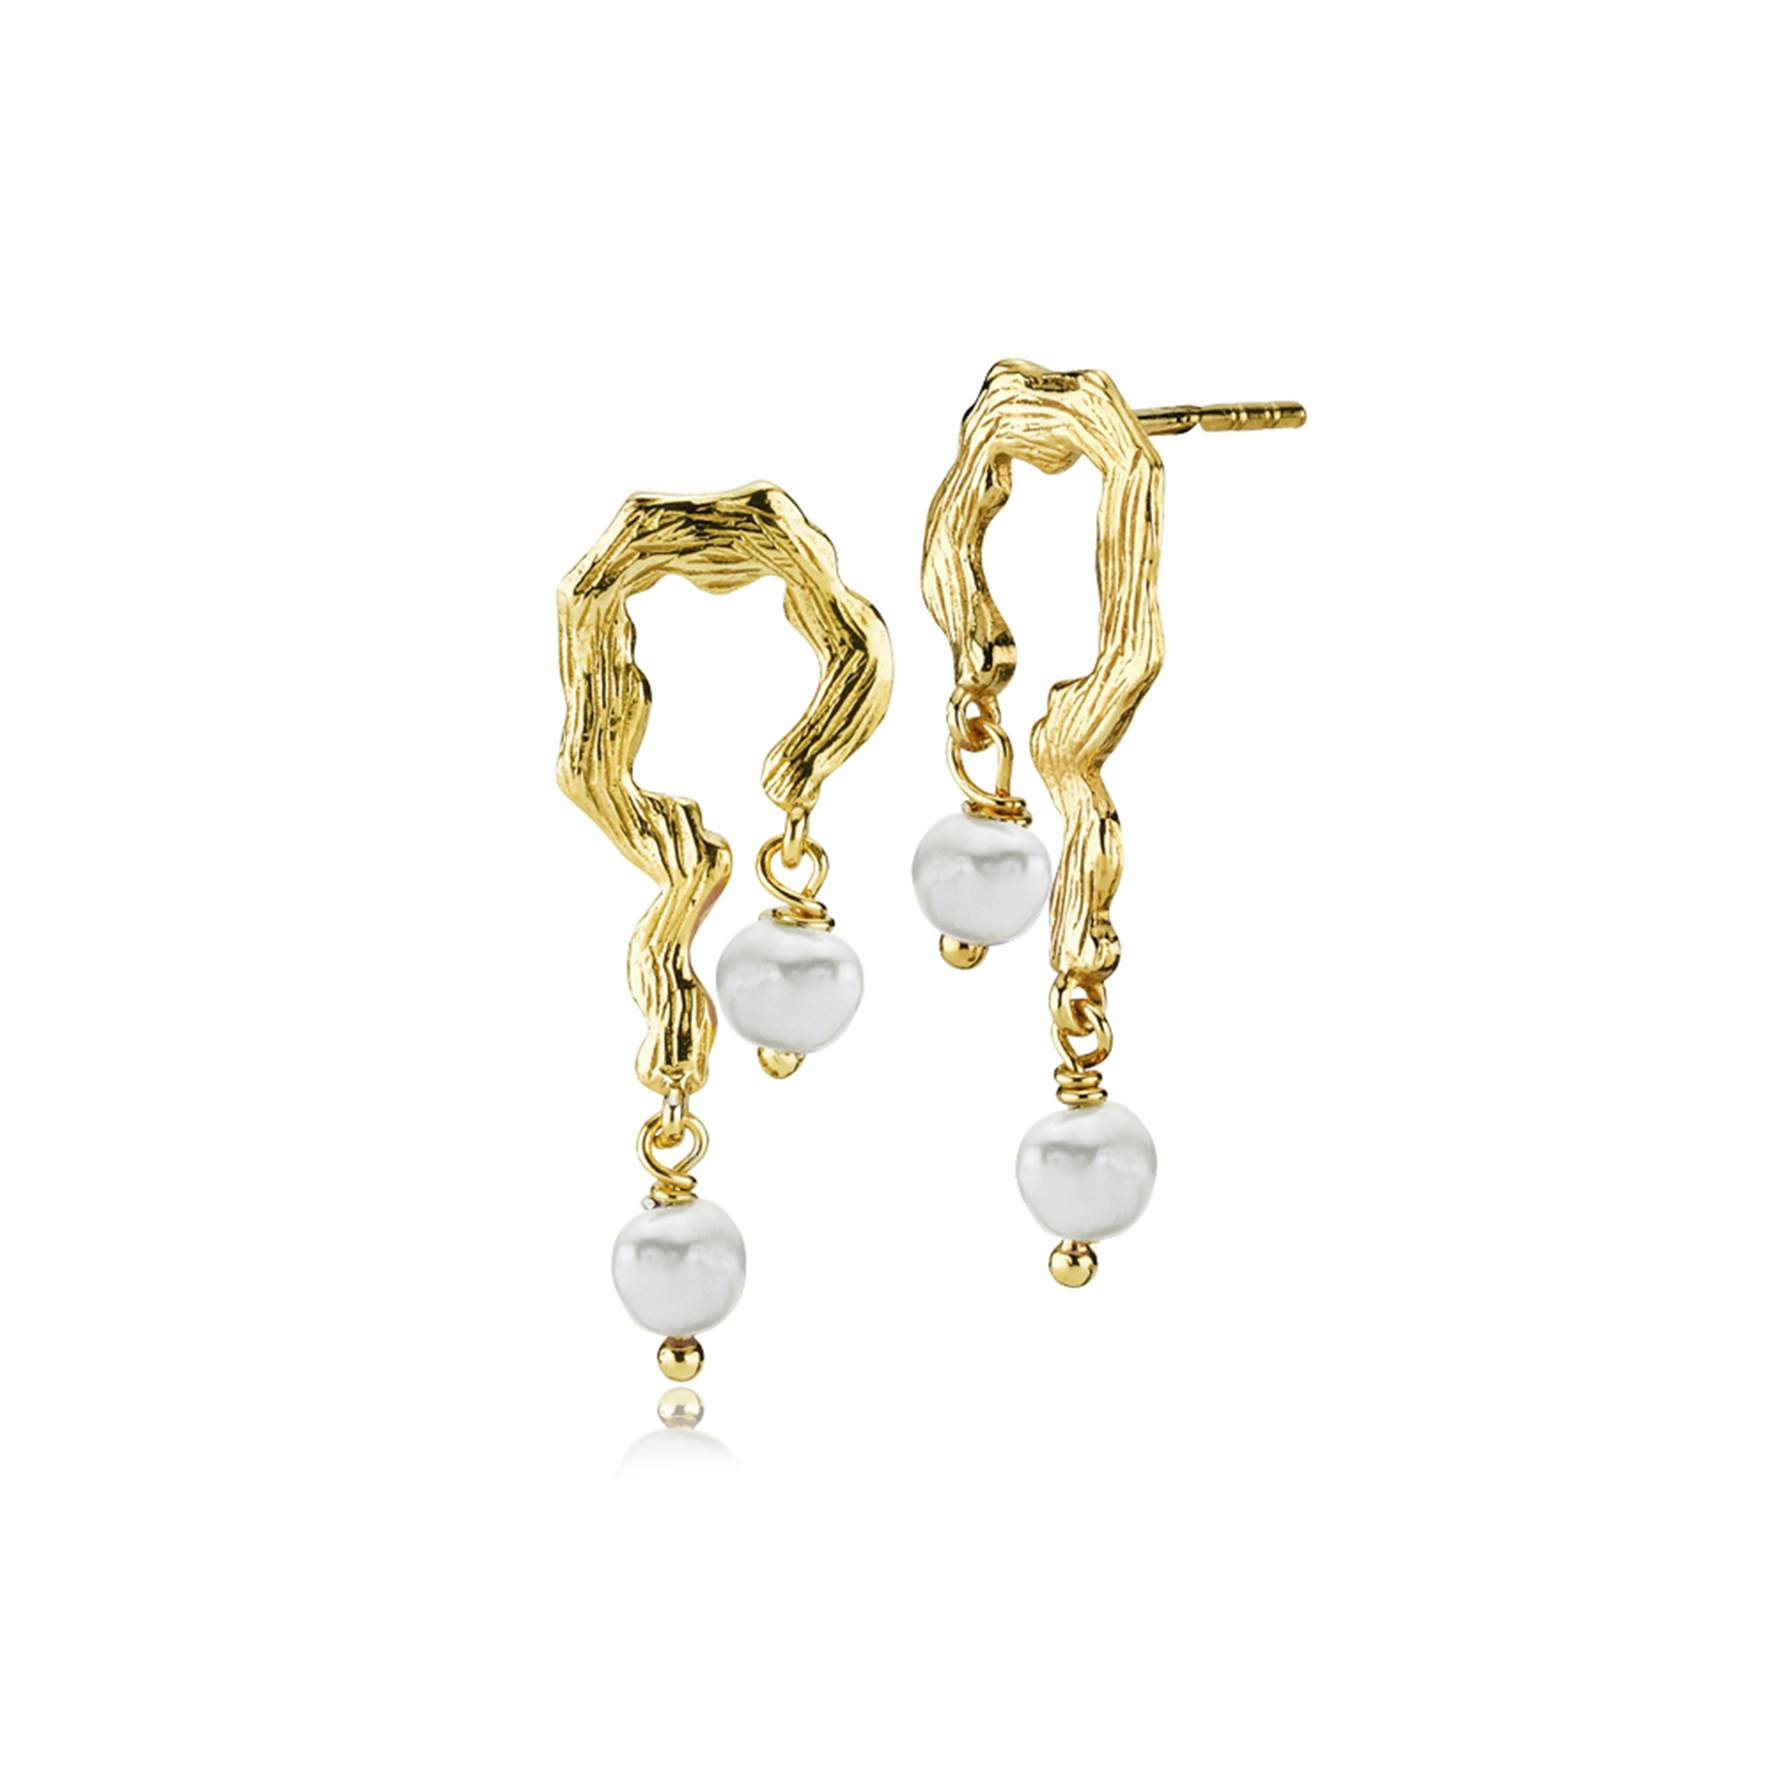 Lærke Bentsen By Sistie Earrings With Pearls fra Sistie i Forgylt-Sølv Sterling 925|Freshwater Pearl